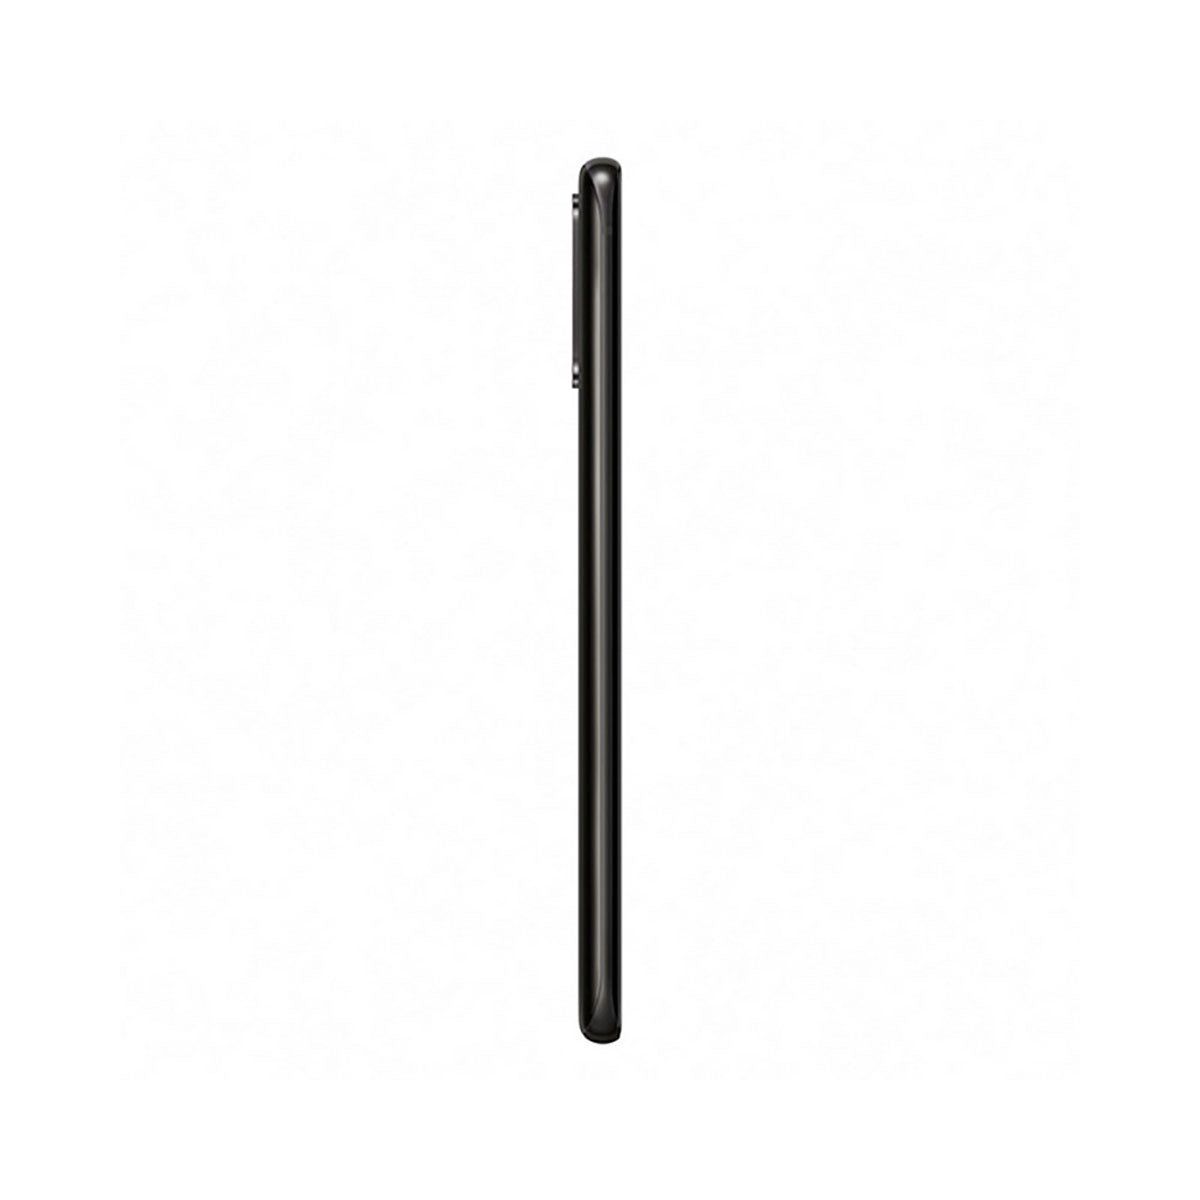 Samsung Galaxy S20+ 8GB/128GB Negro (Cosmic Black) Dual SIM G985F Smartphone | Samsung